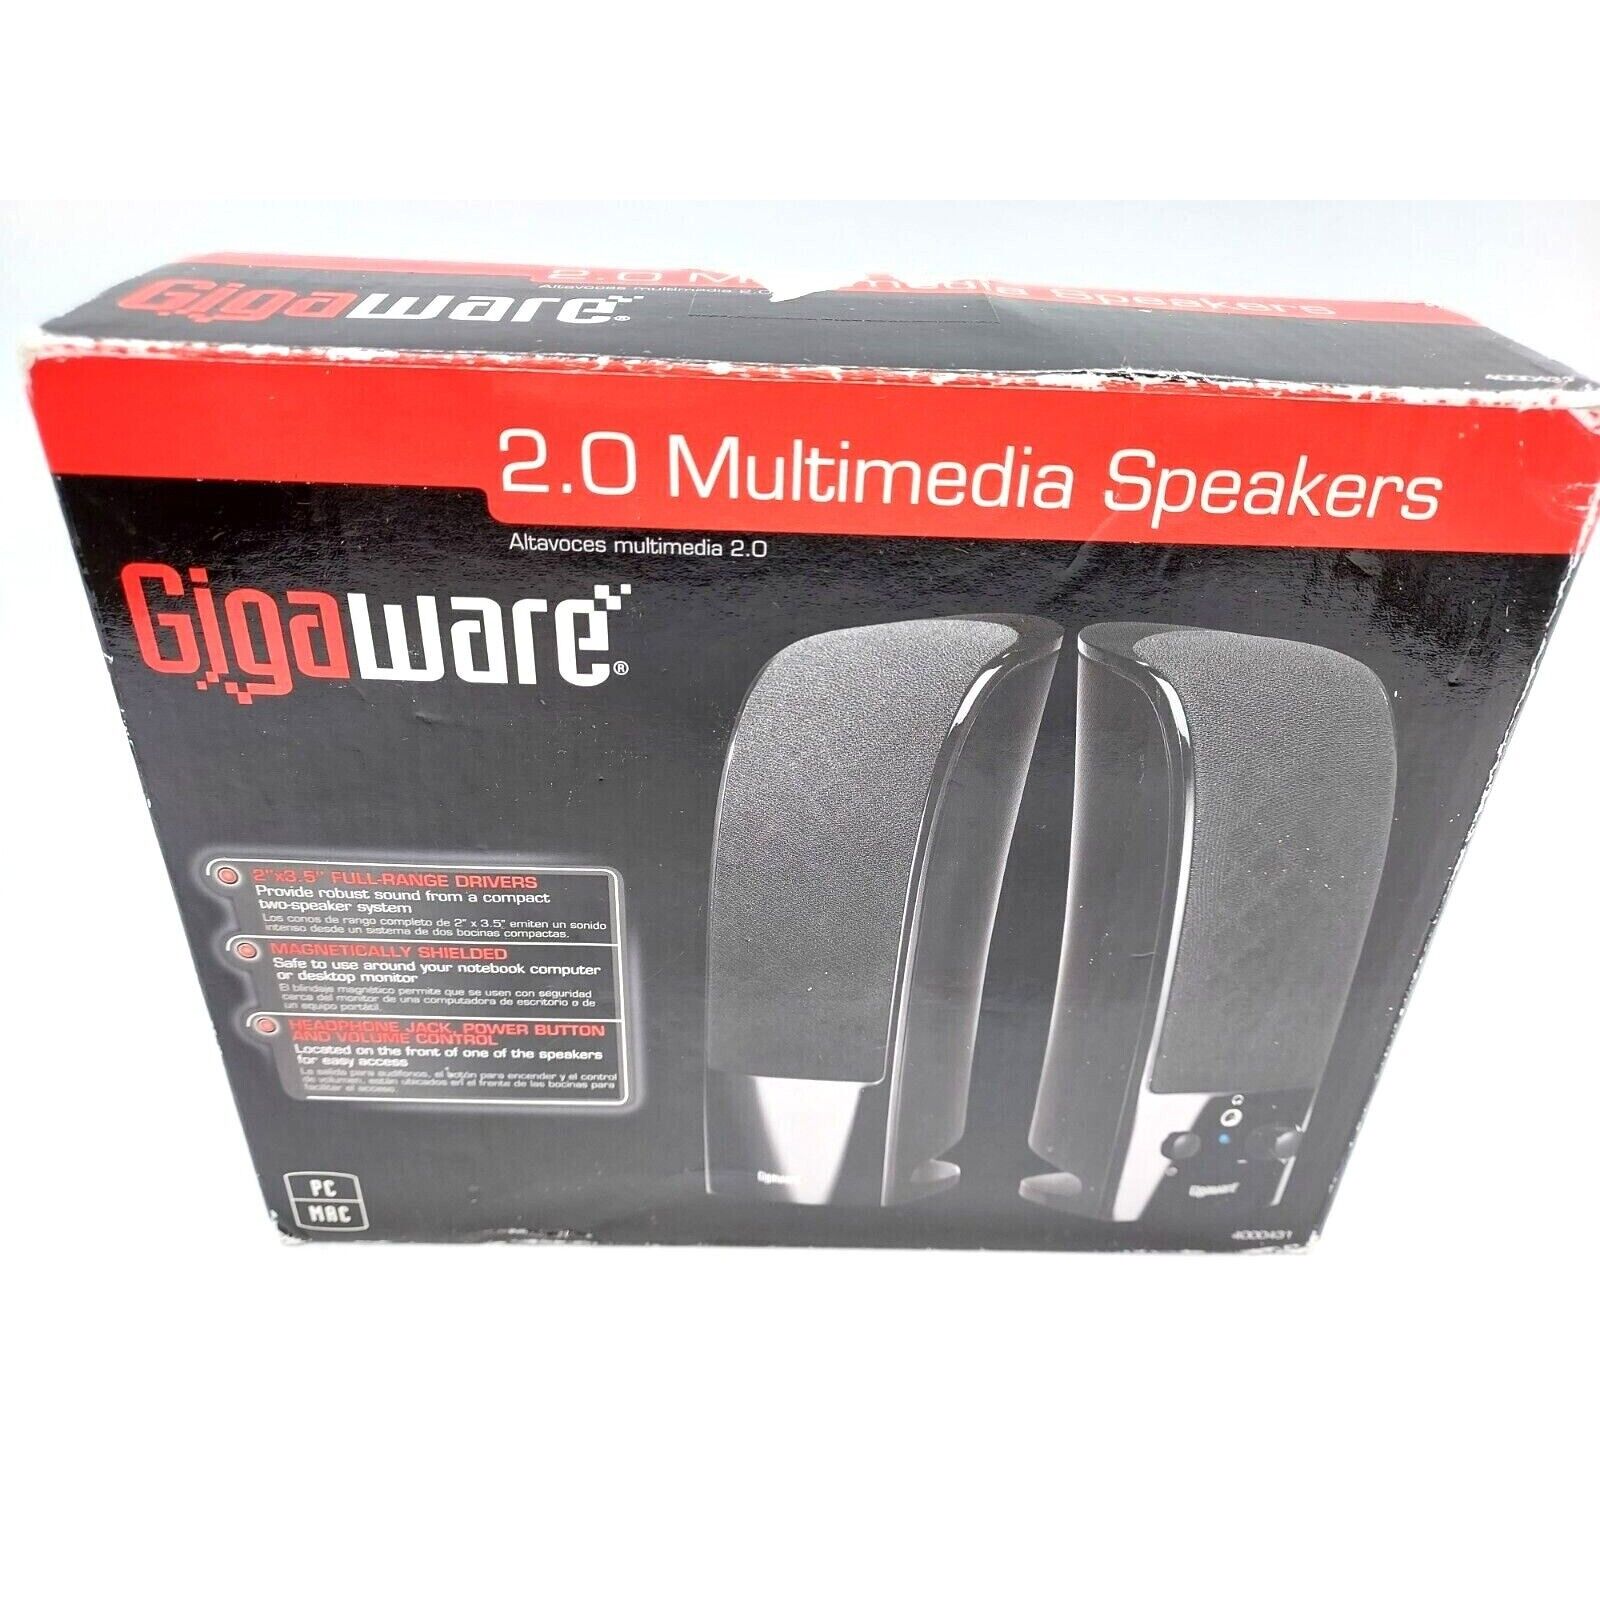 Gigaware 2.0 Multimedia Computer Speakers 4000431 w/Power Cord